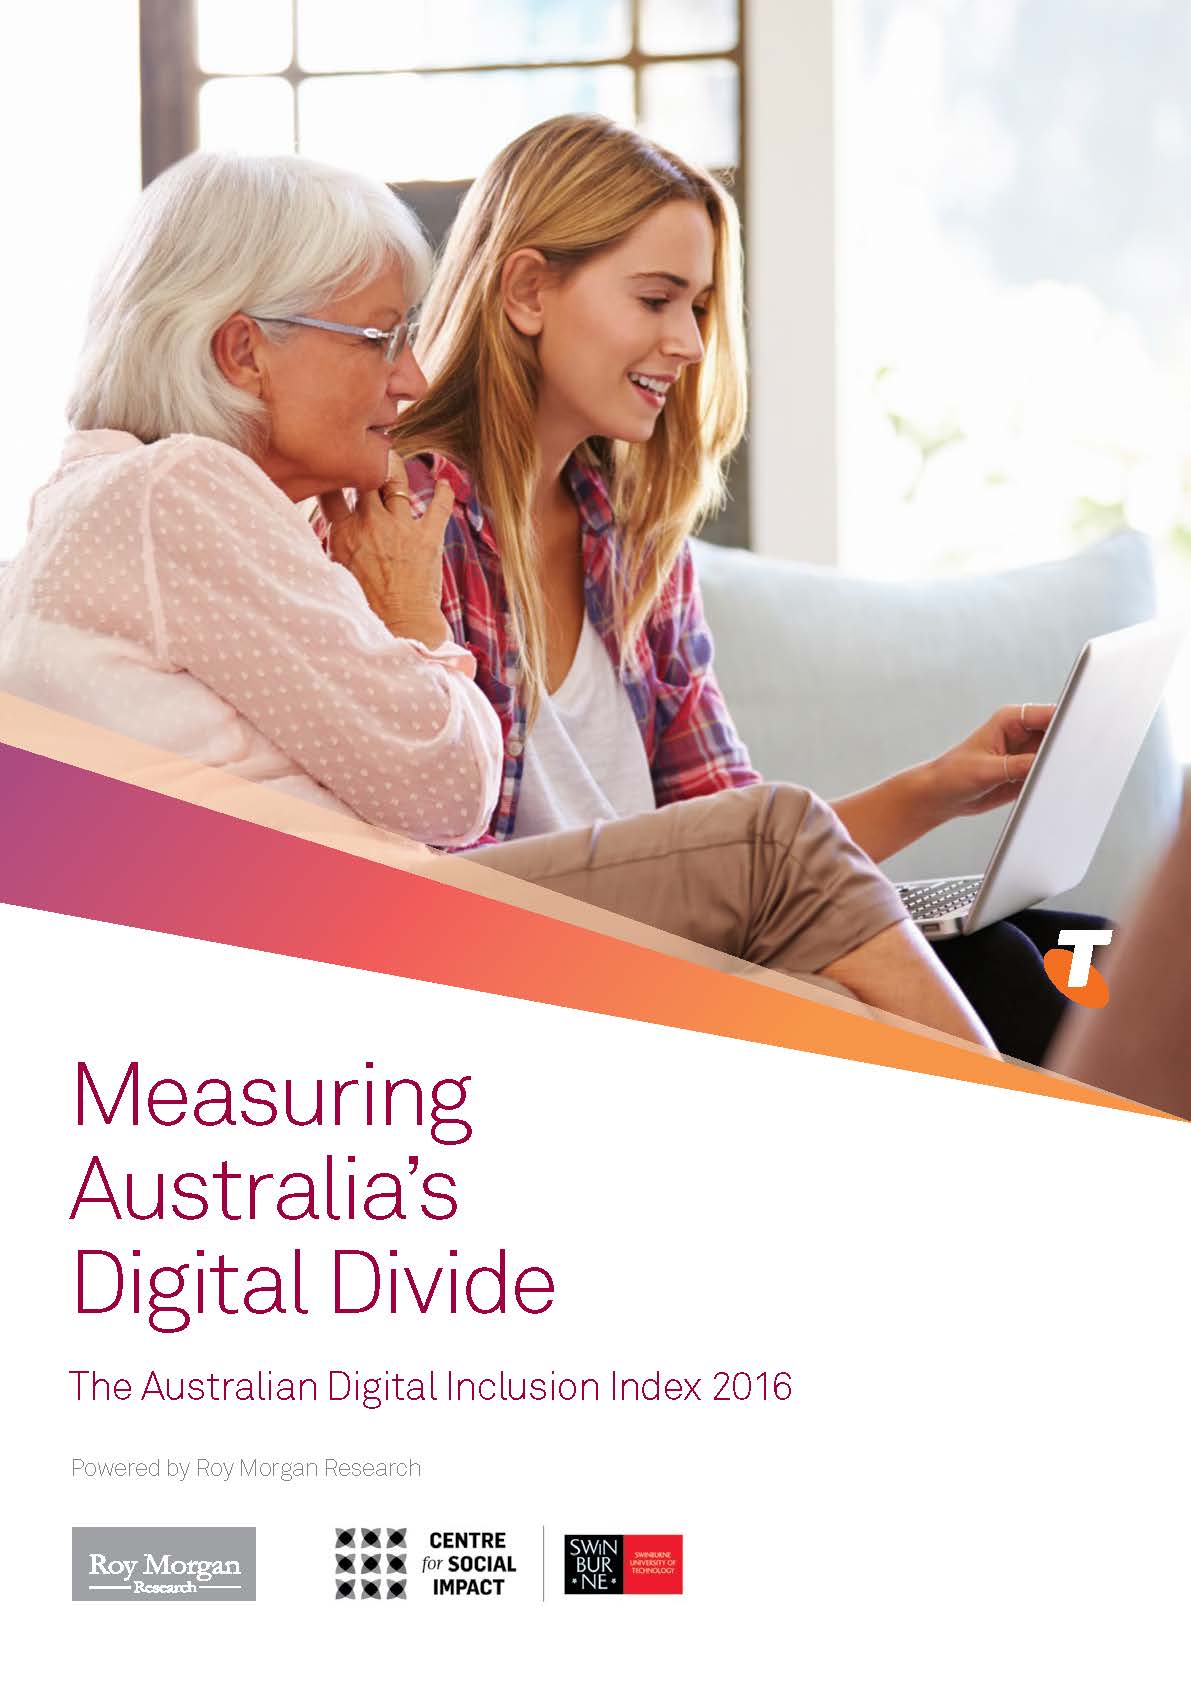 The 2016 Australian Digital Inclusion Index report